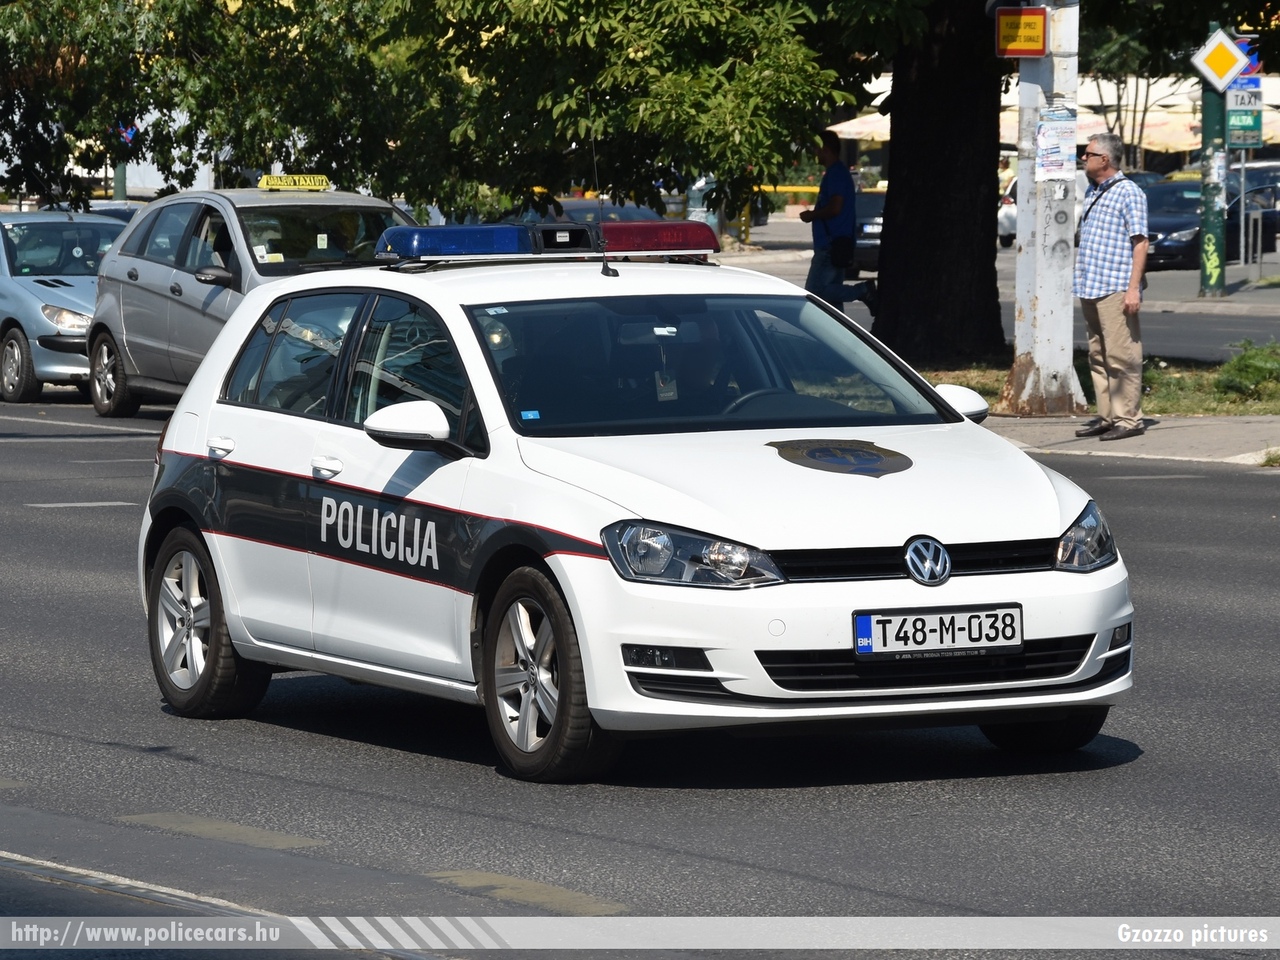 Volkswagen Golf VII, fotó: Gzozzo pictures
Keywords: Bosznia-Hercegovina rendőr rendőrautó rendőrség bosnia bosnia-herzegovina police policecar